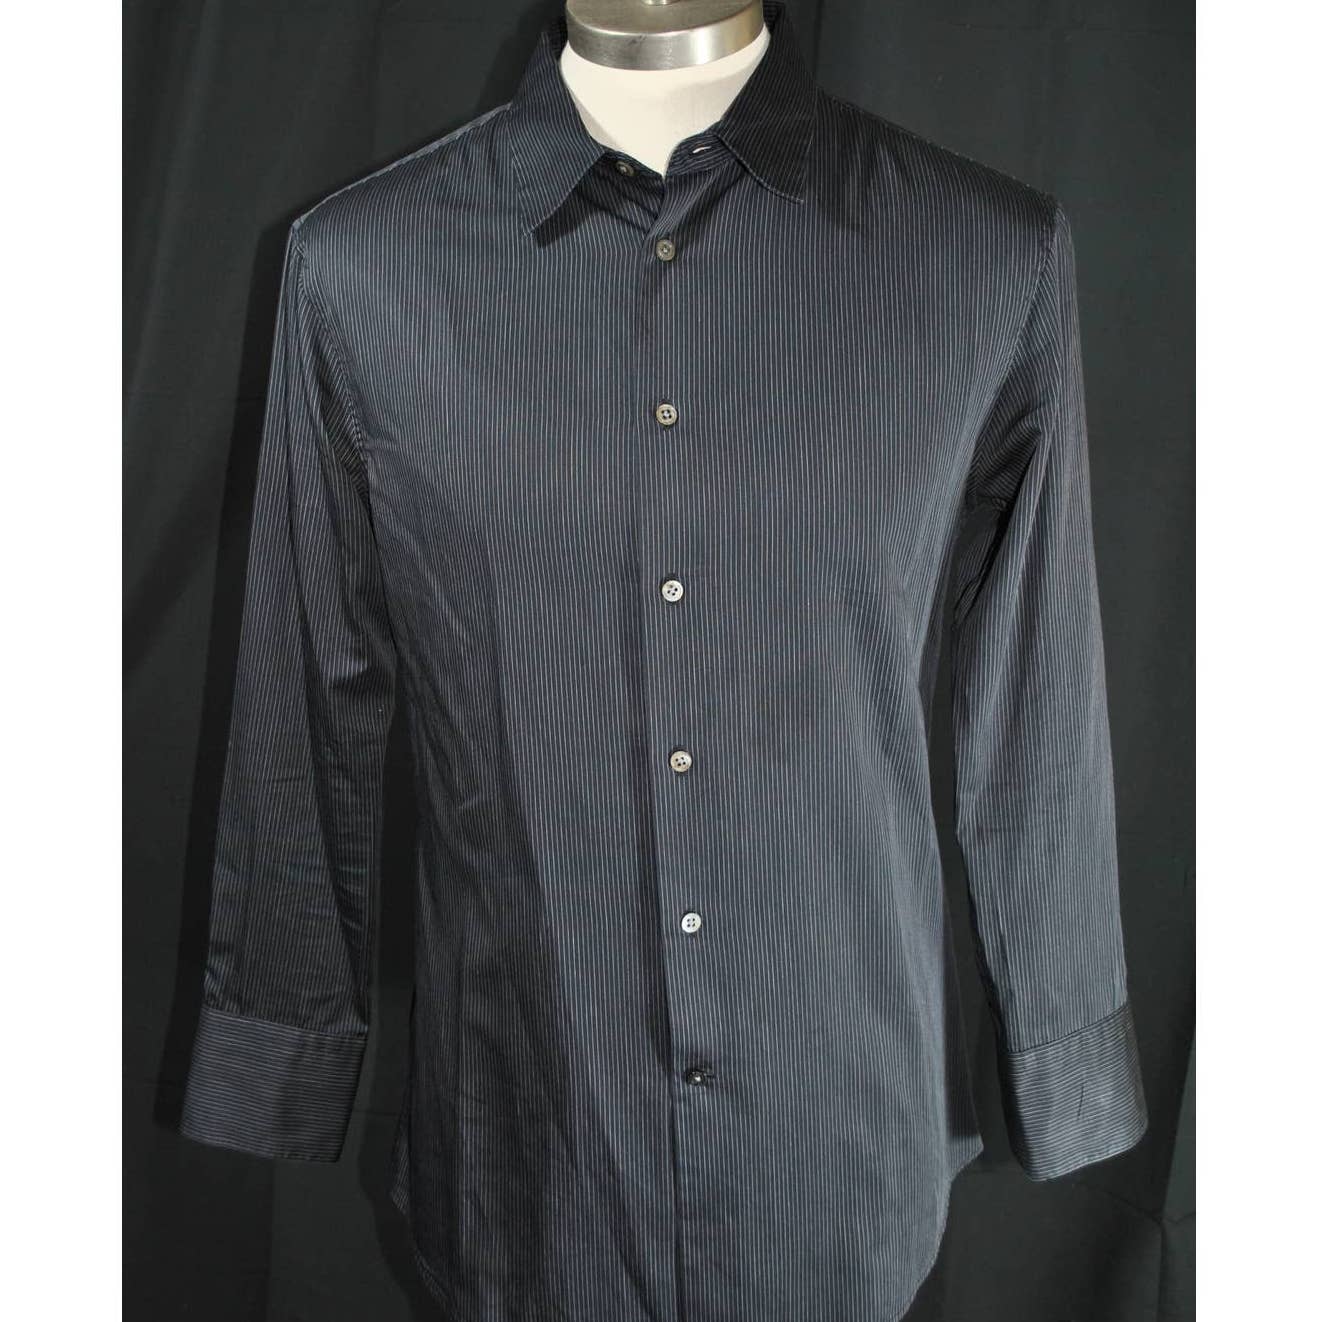 John Varvatos Black and White Pinstripe Button Up Shirt- L